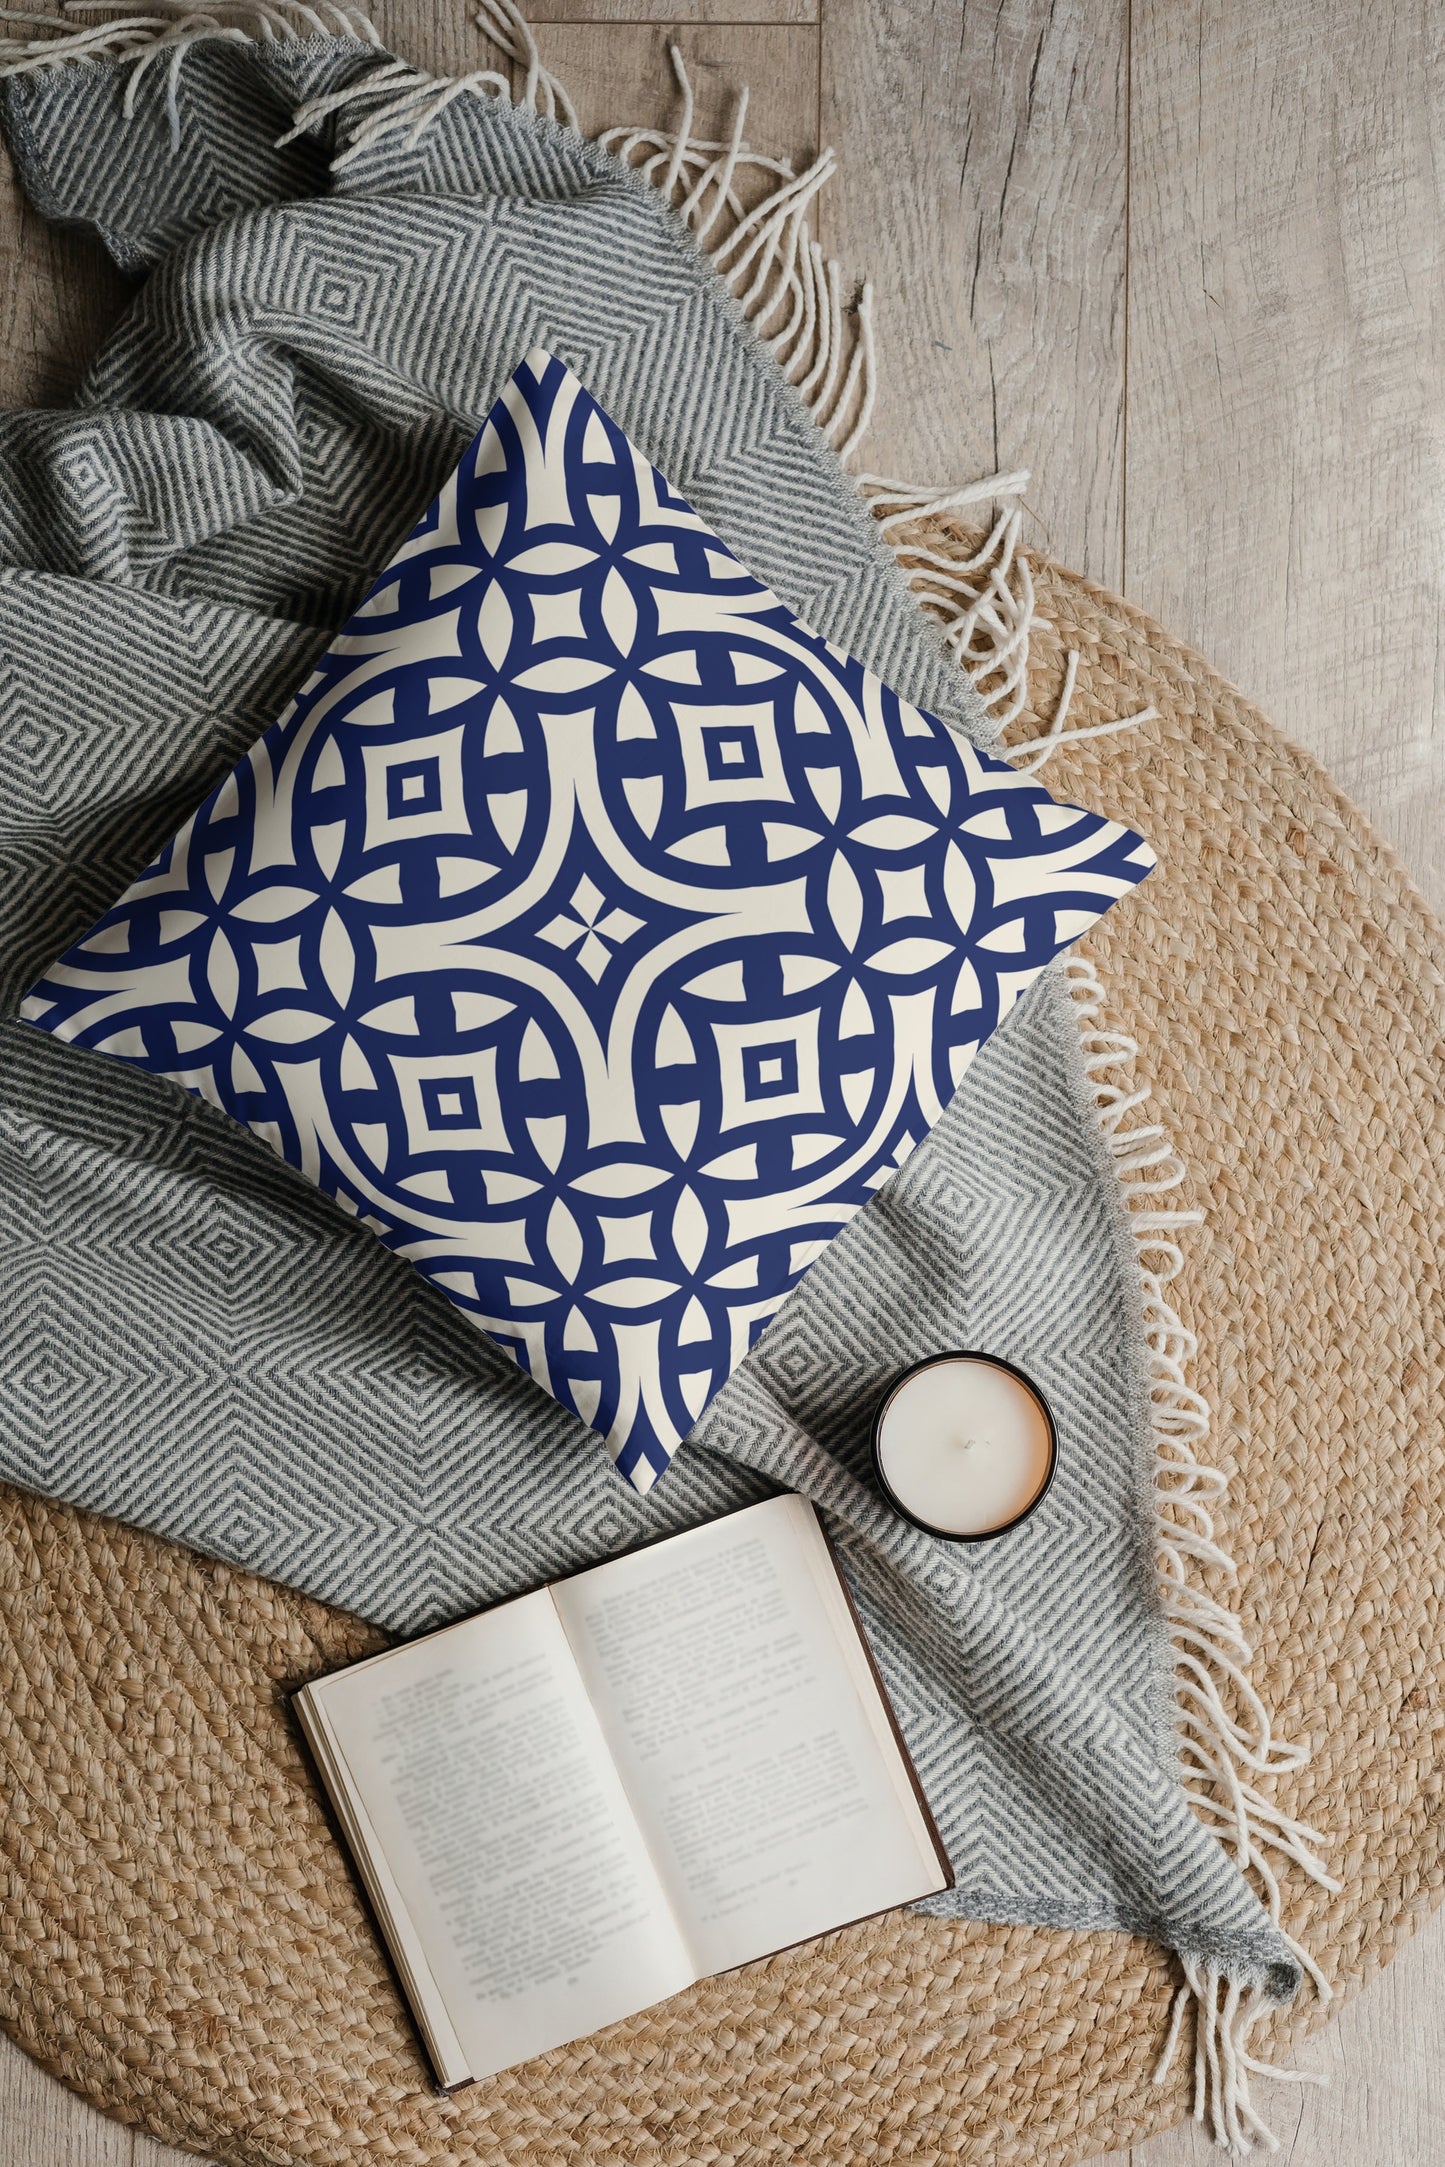 Geometric Outdoor Pillows Navy Blue & Cream